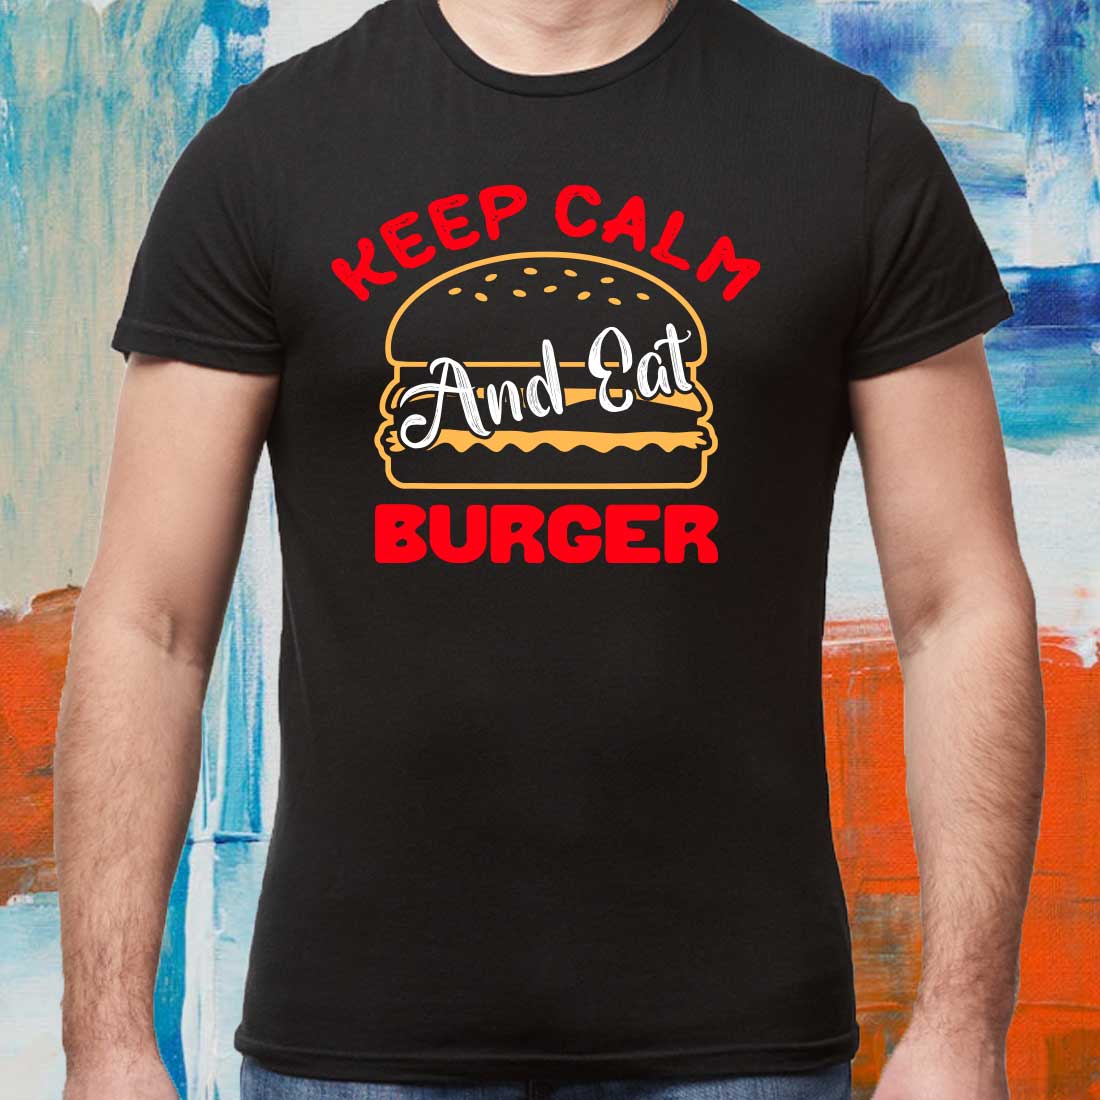 burger t shirt 9 183